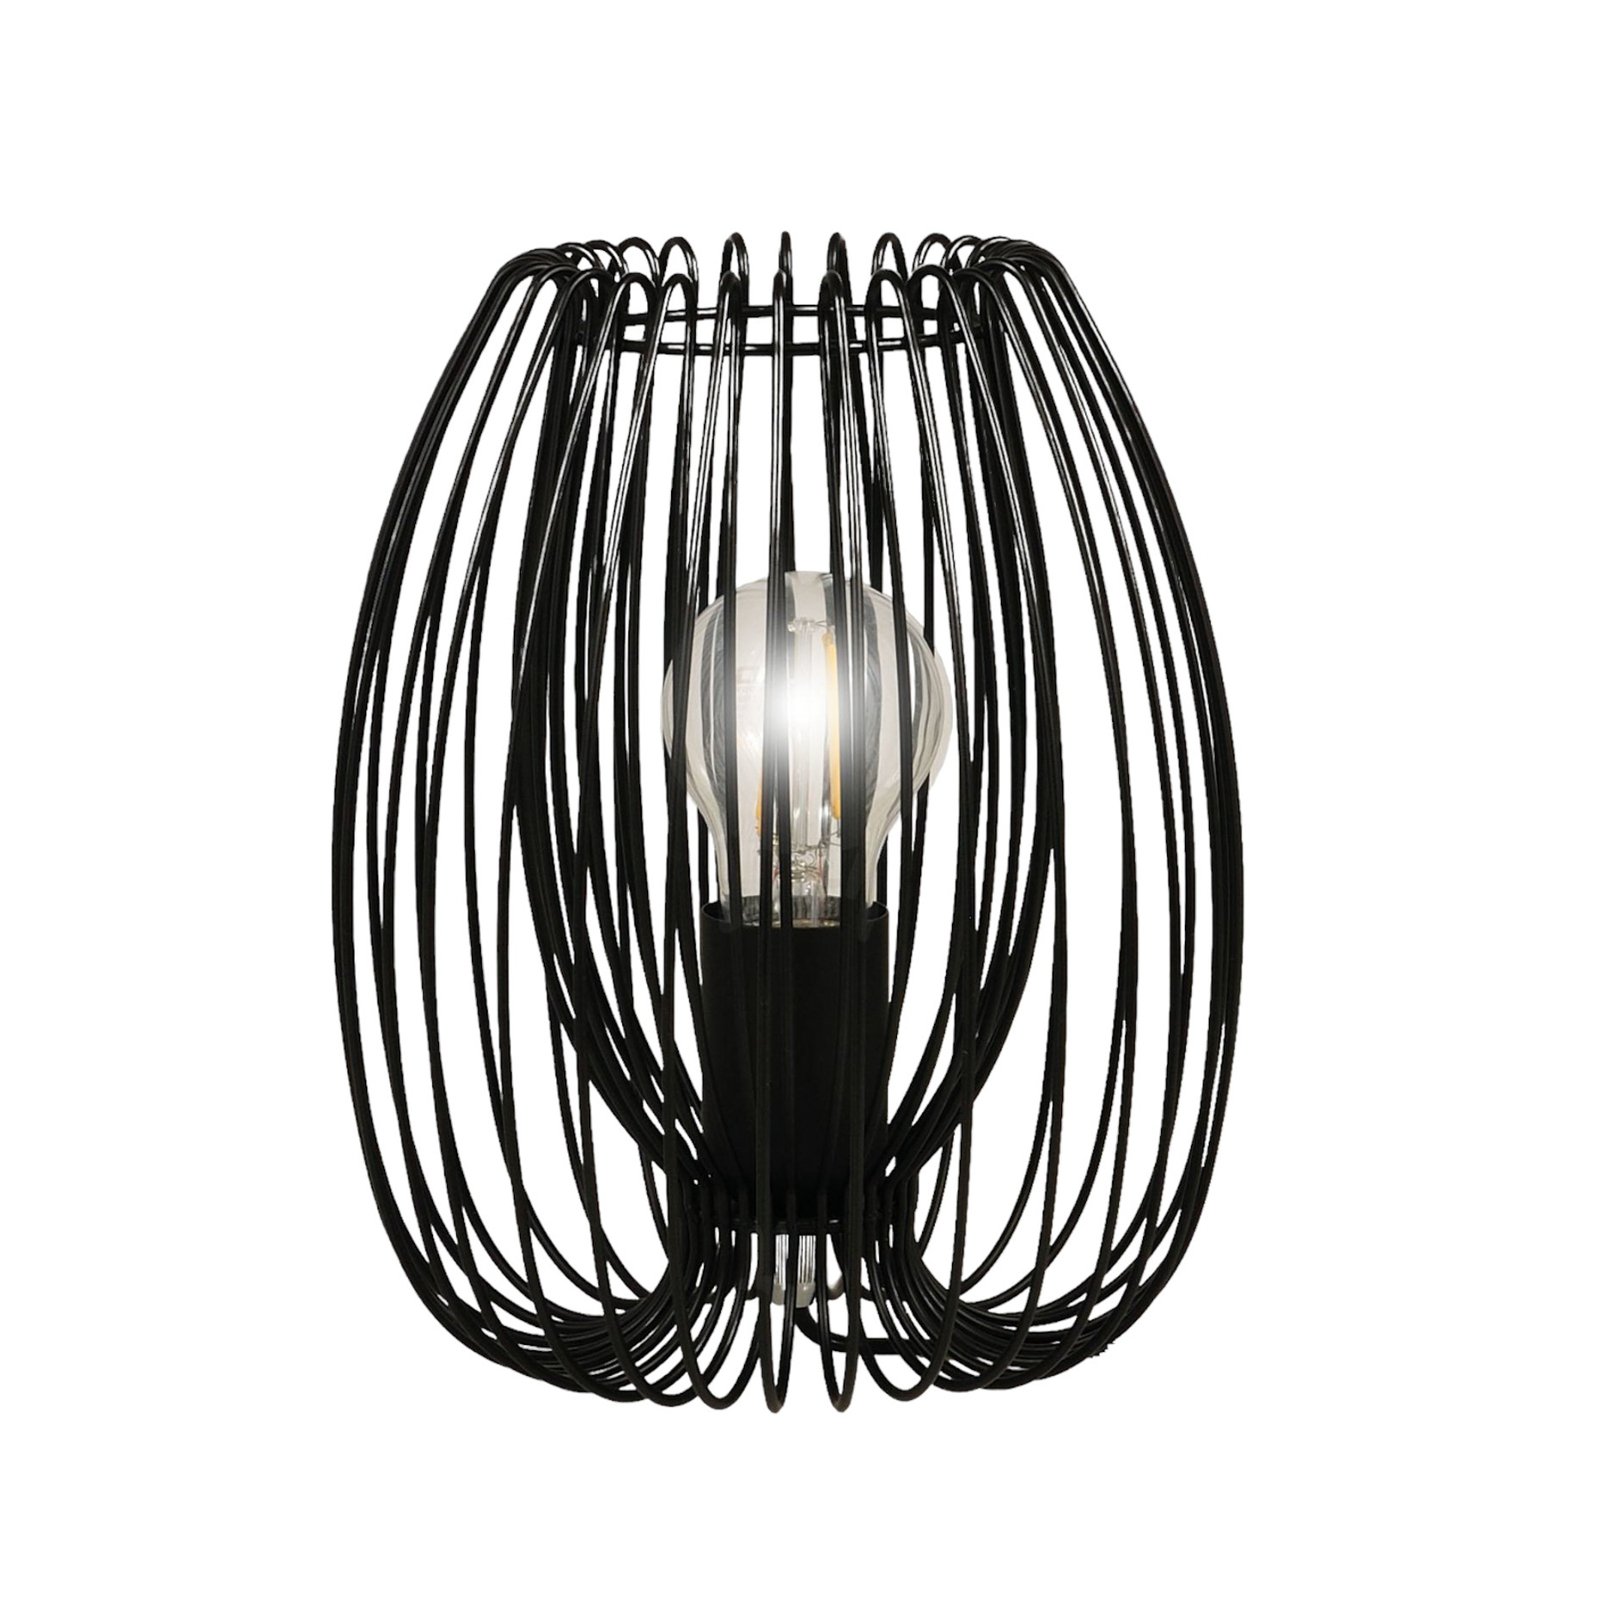 Camp bordlampe, sort, trådkurv, Ø 20 cm